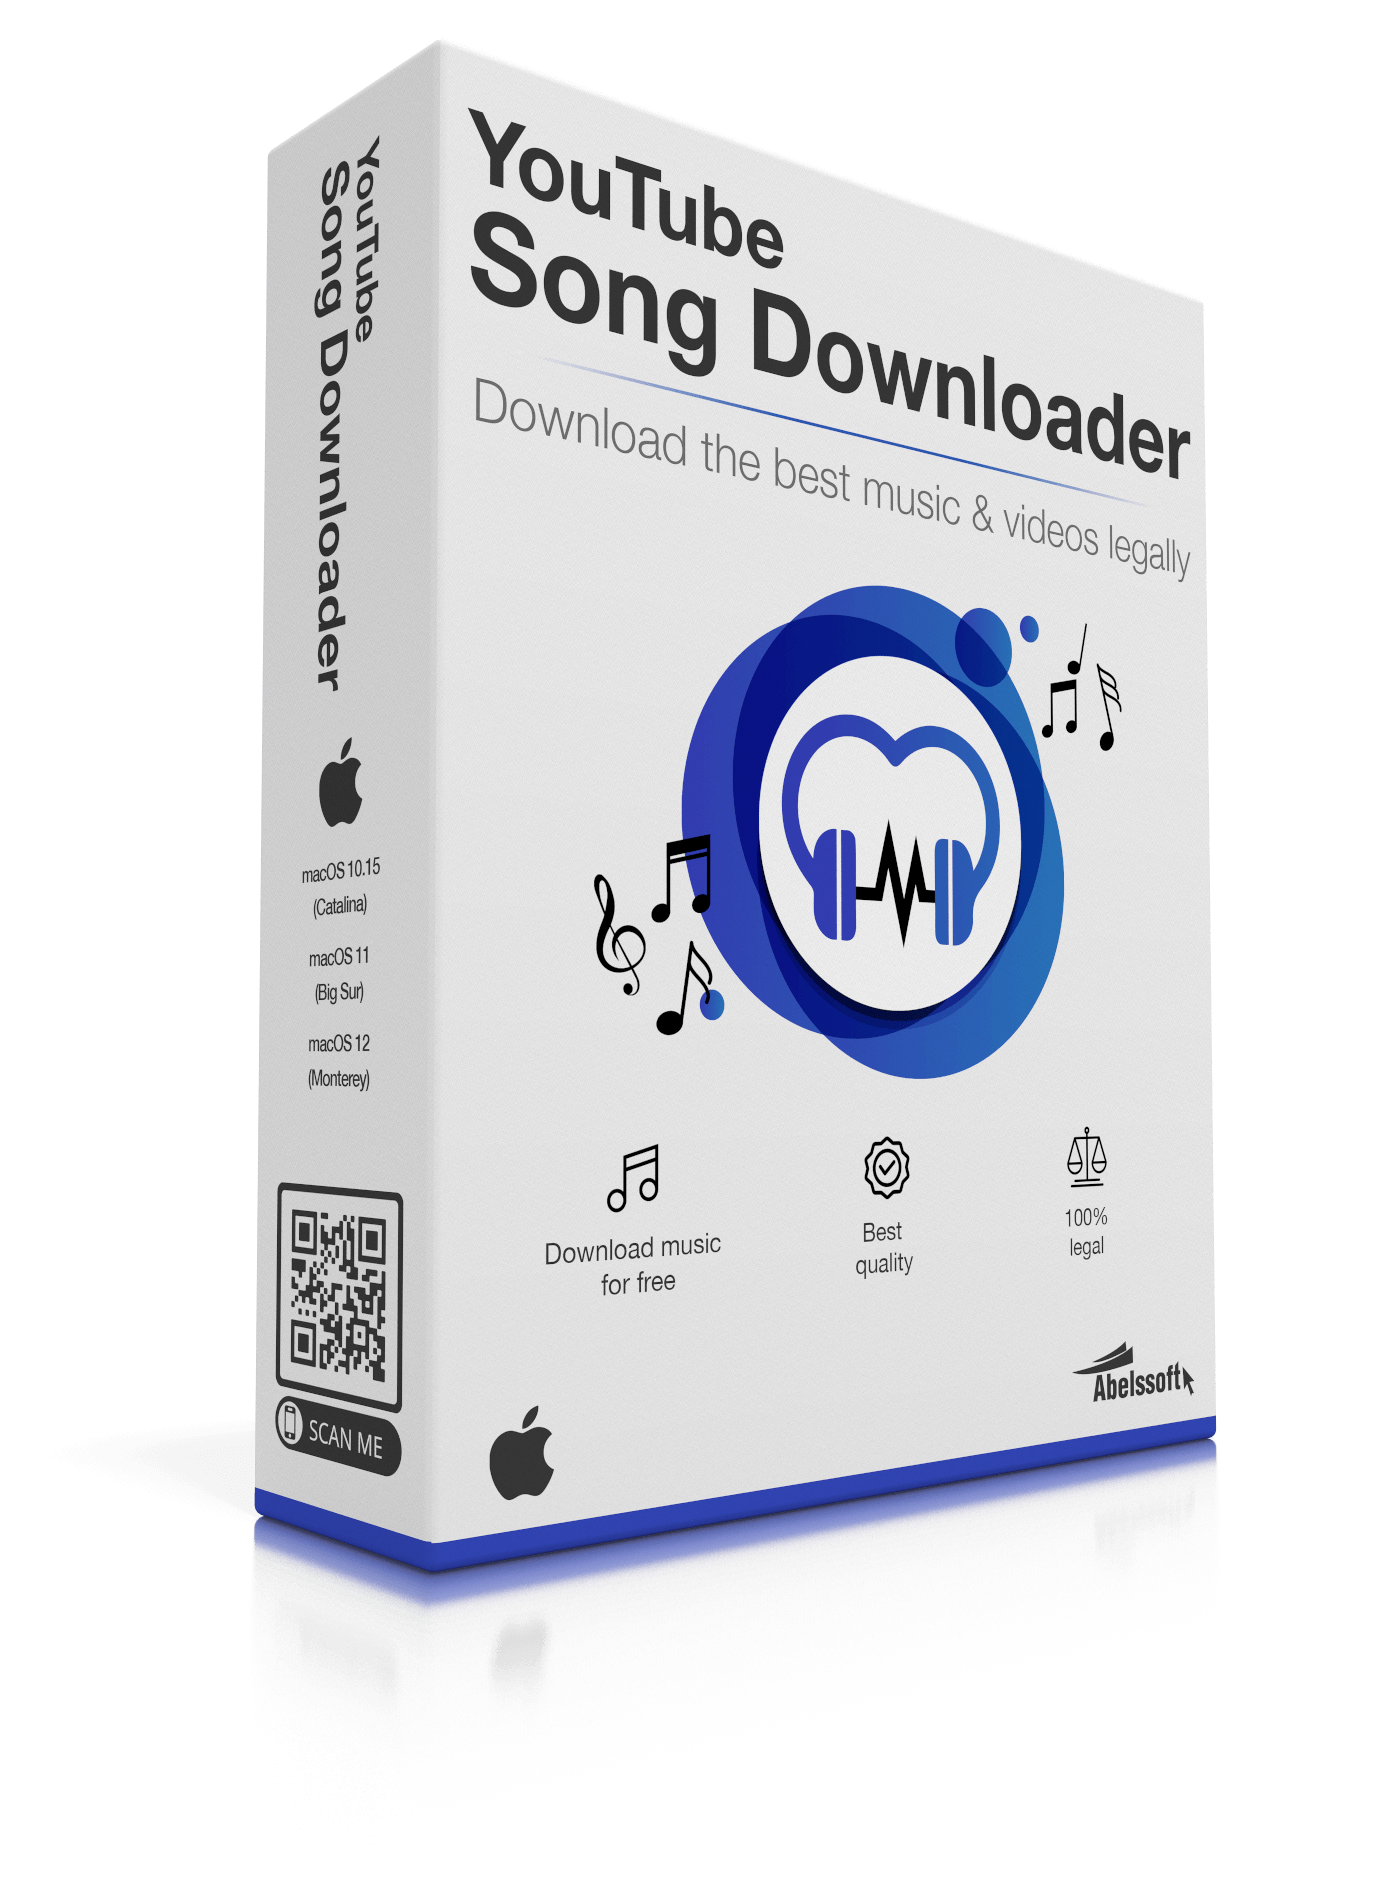 YouTube Song Downloader - Mac